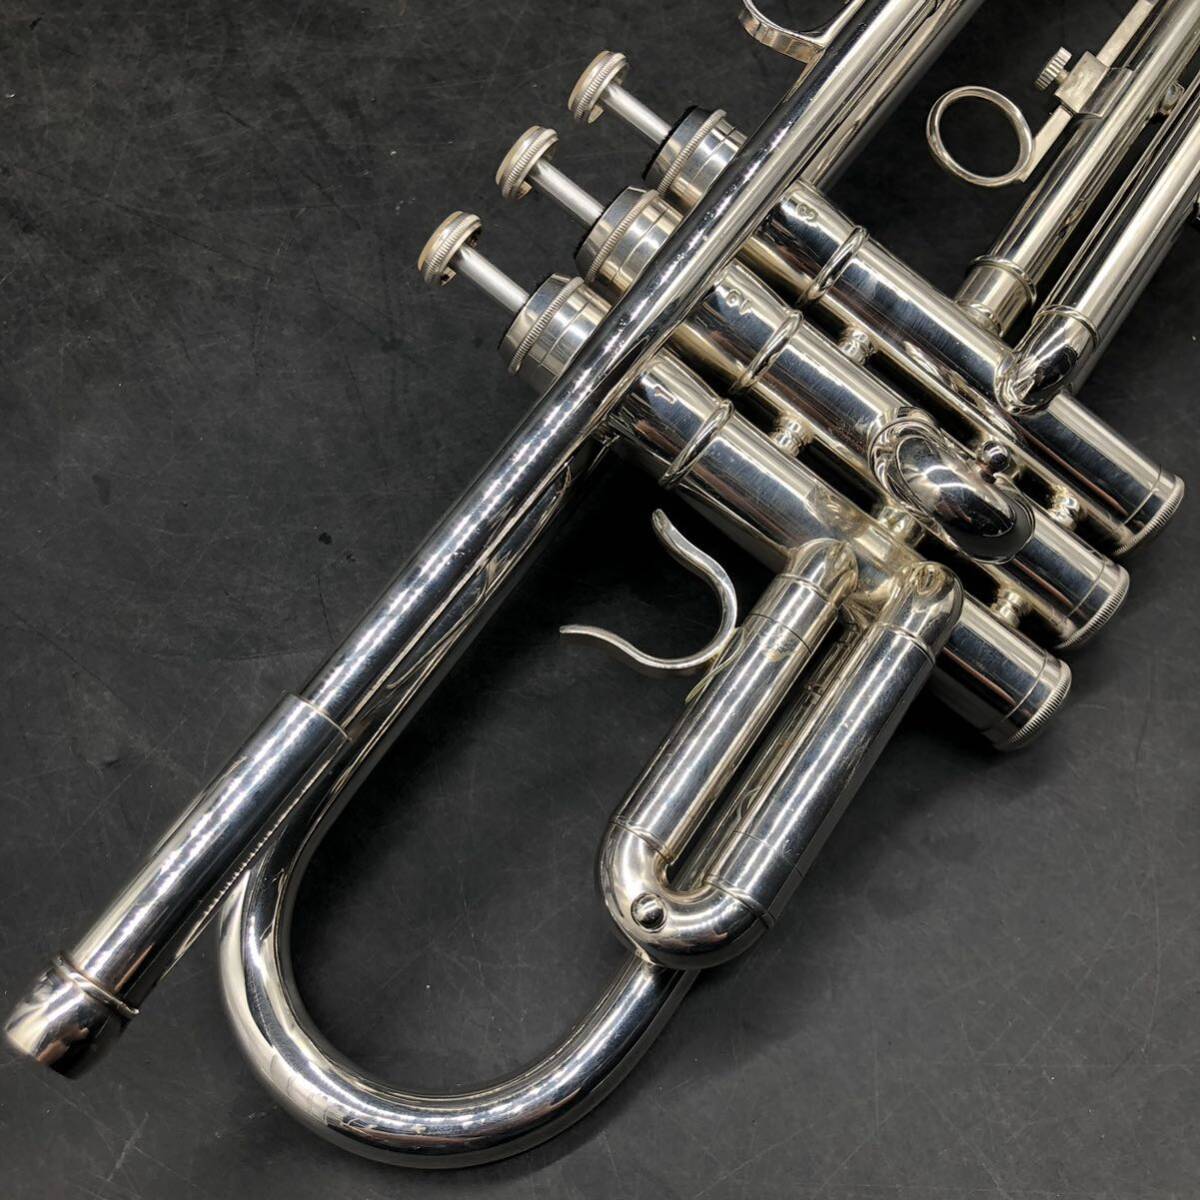 438 Heinrich トランペット IH02018 管楽器 金管楽器 吹奏楽器 音楽 演奏 ケース付 ハードケース付の画像5